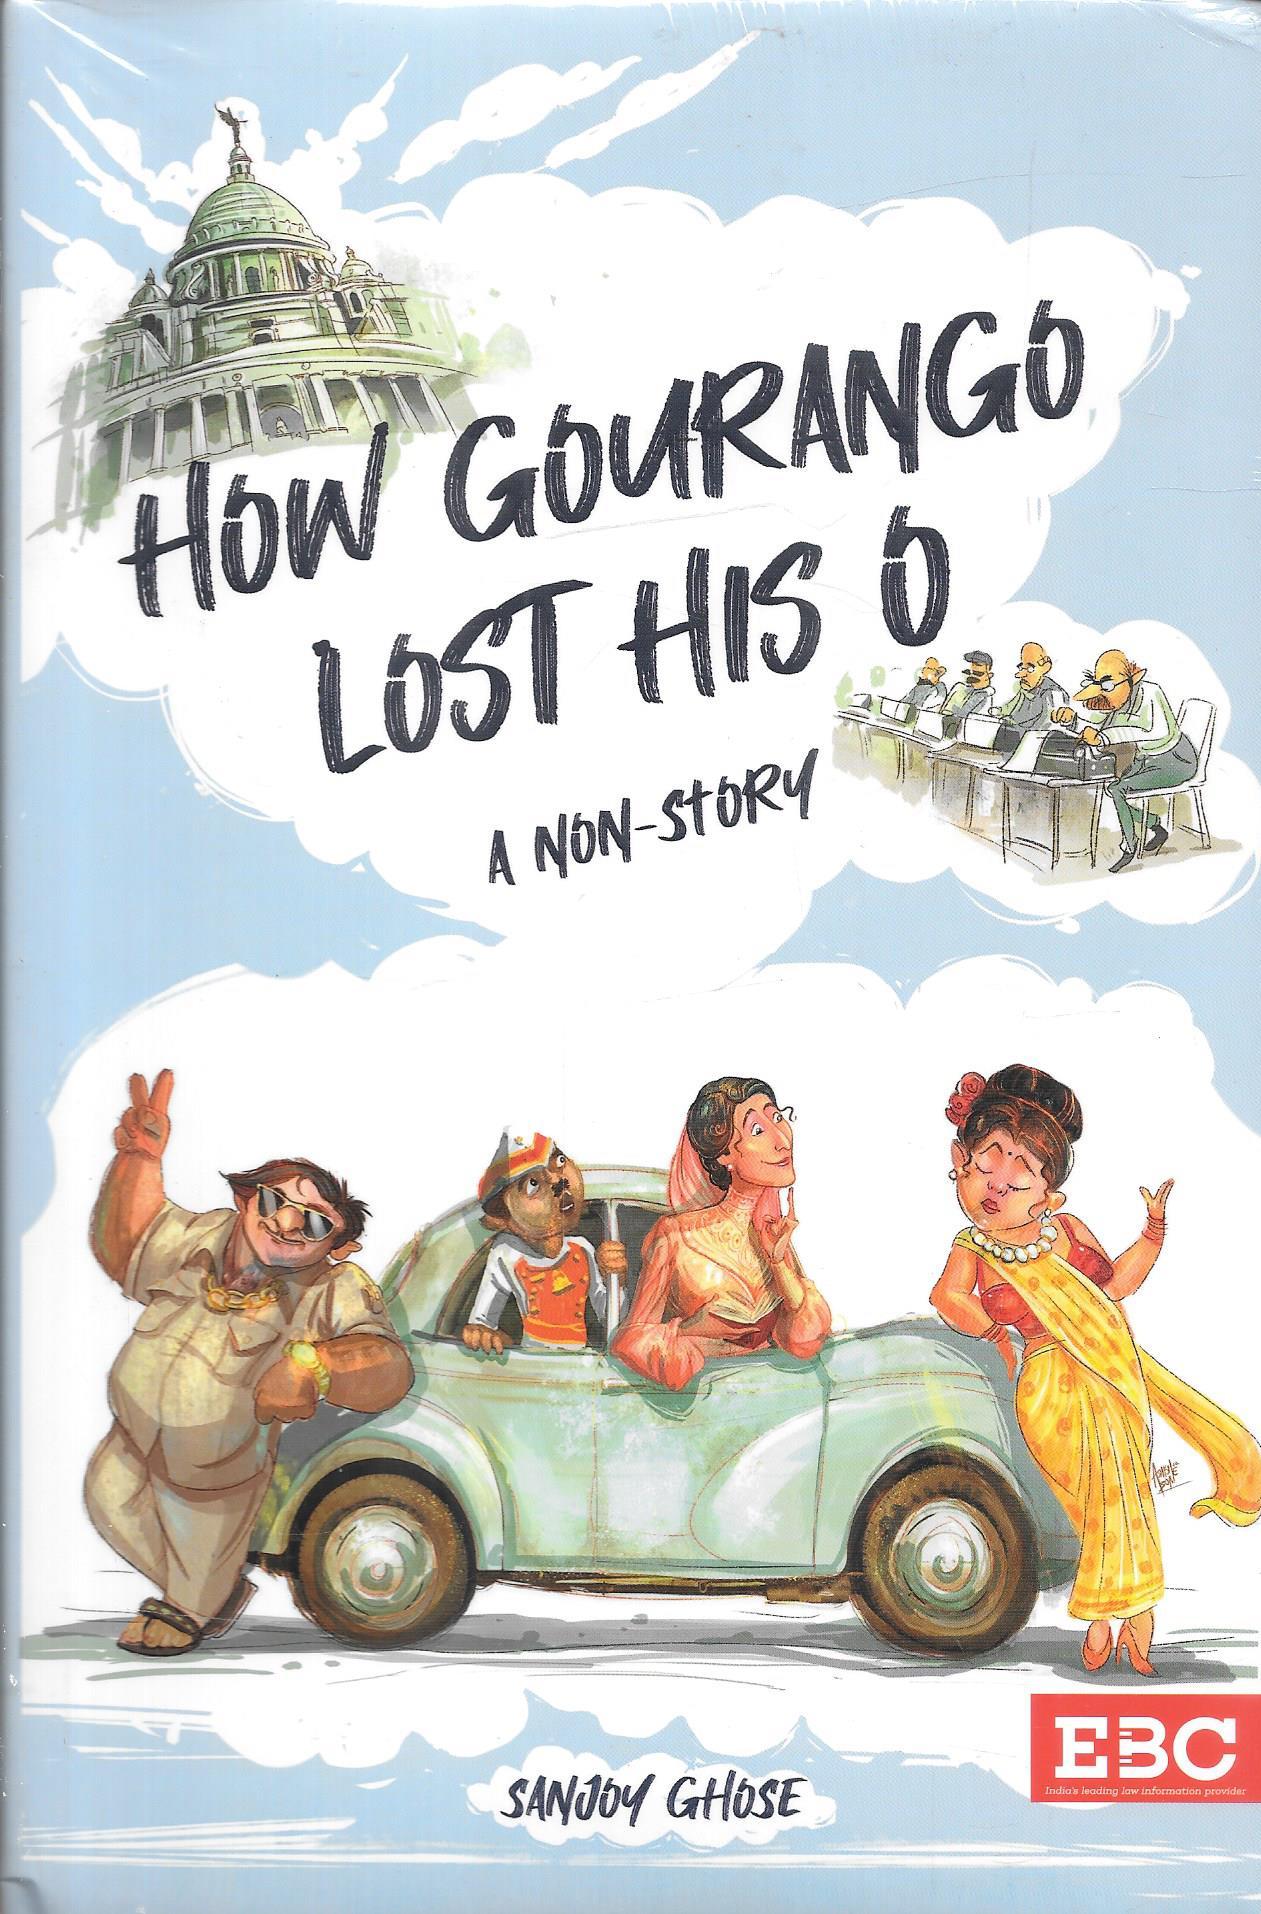 How Gourango Lost His O